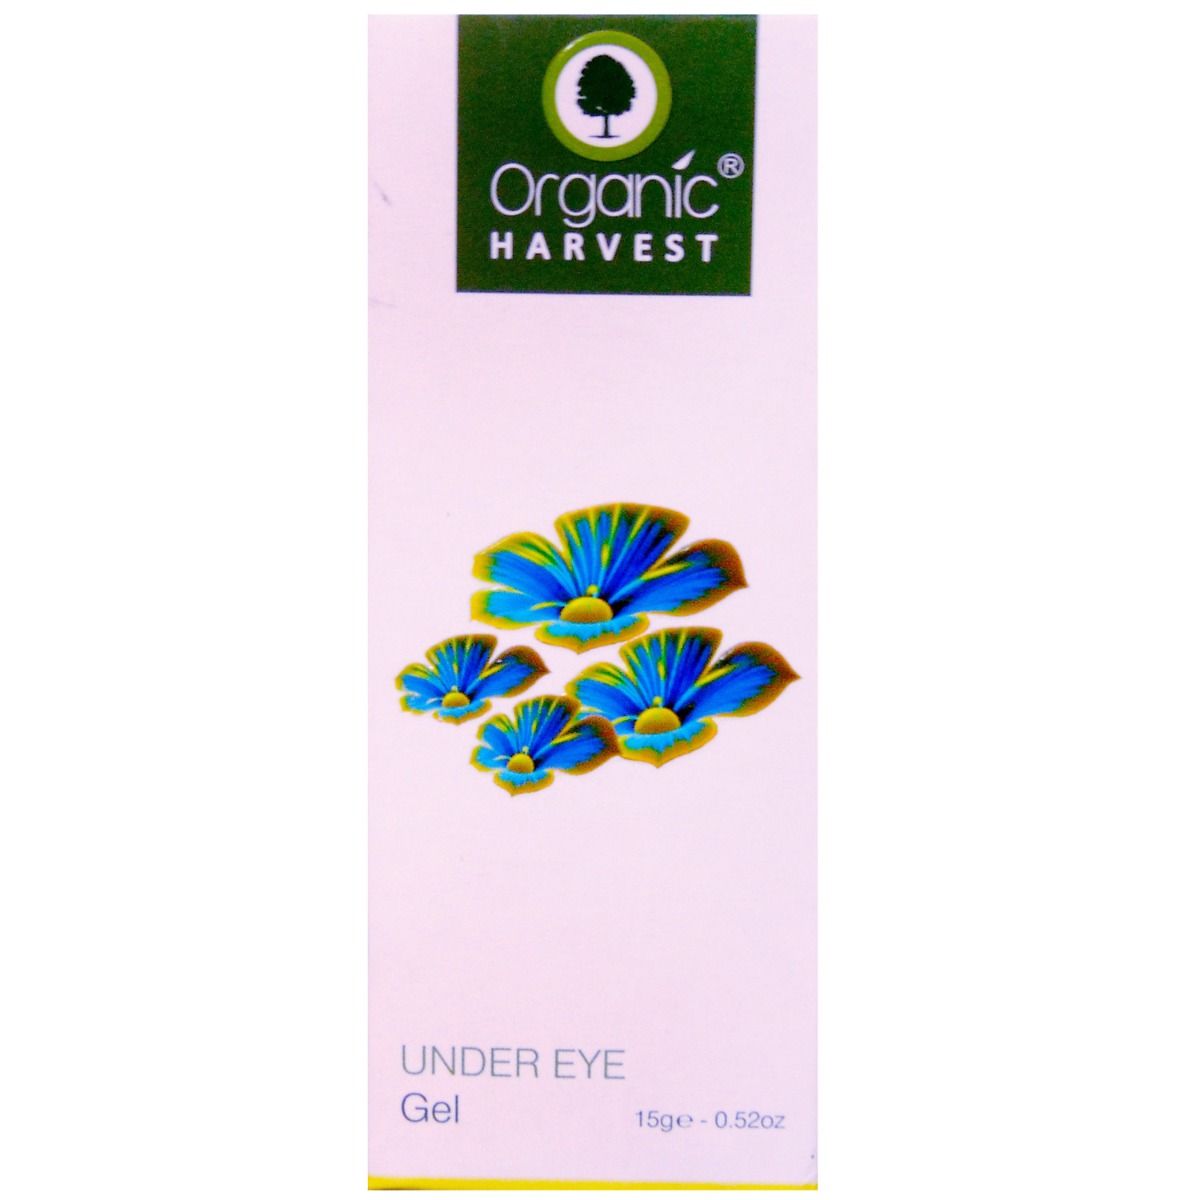 Organic Harvest Under Eye Gel, 15 gm, Pack of 1 